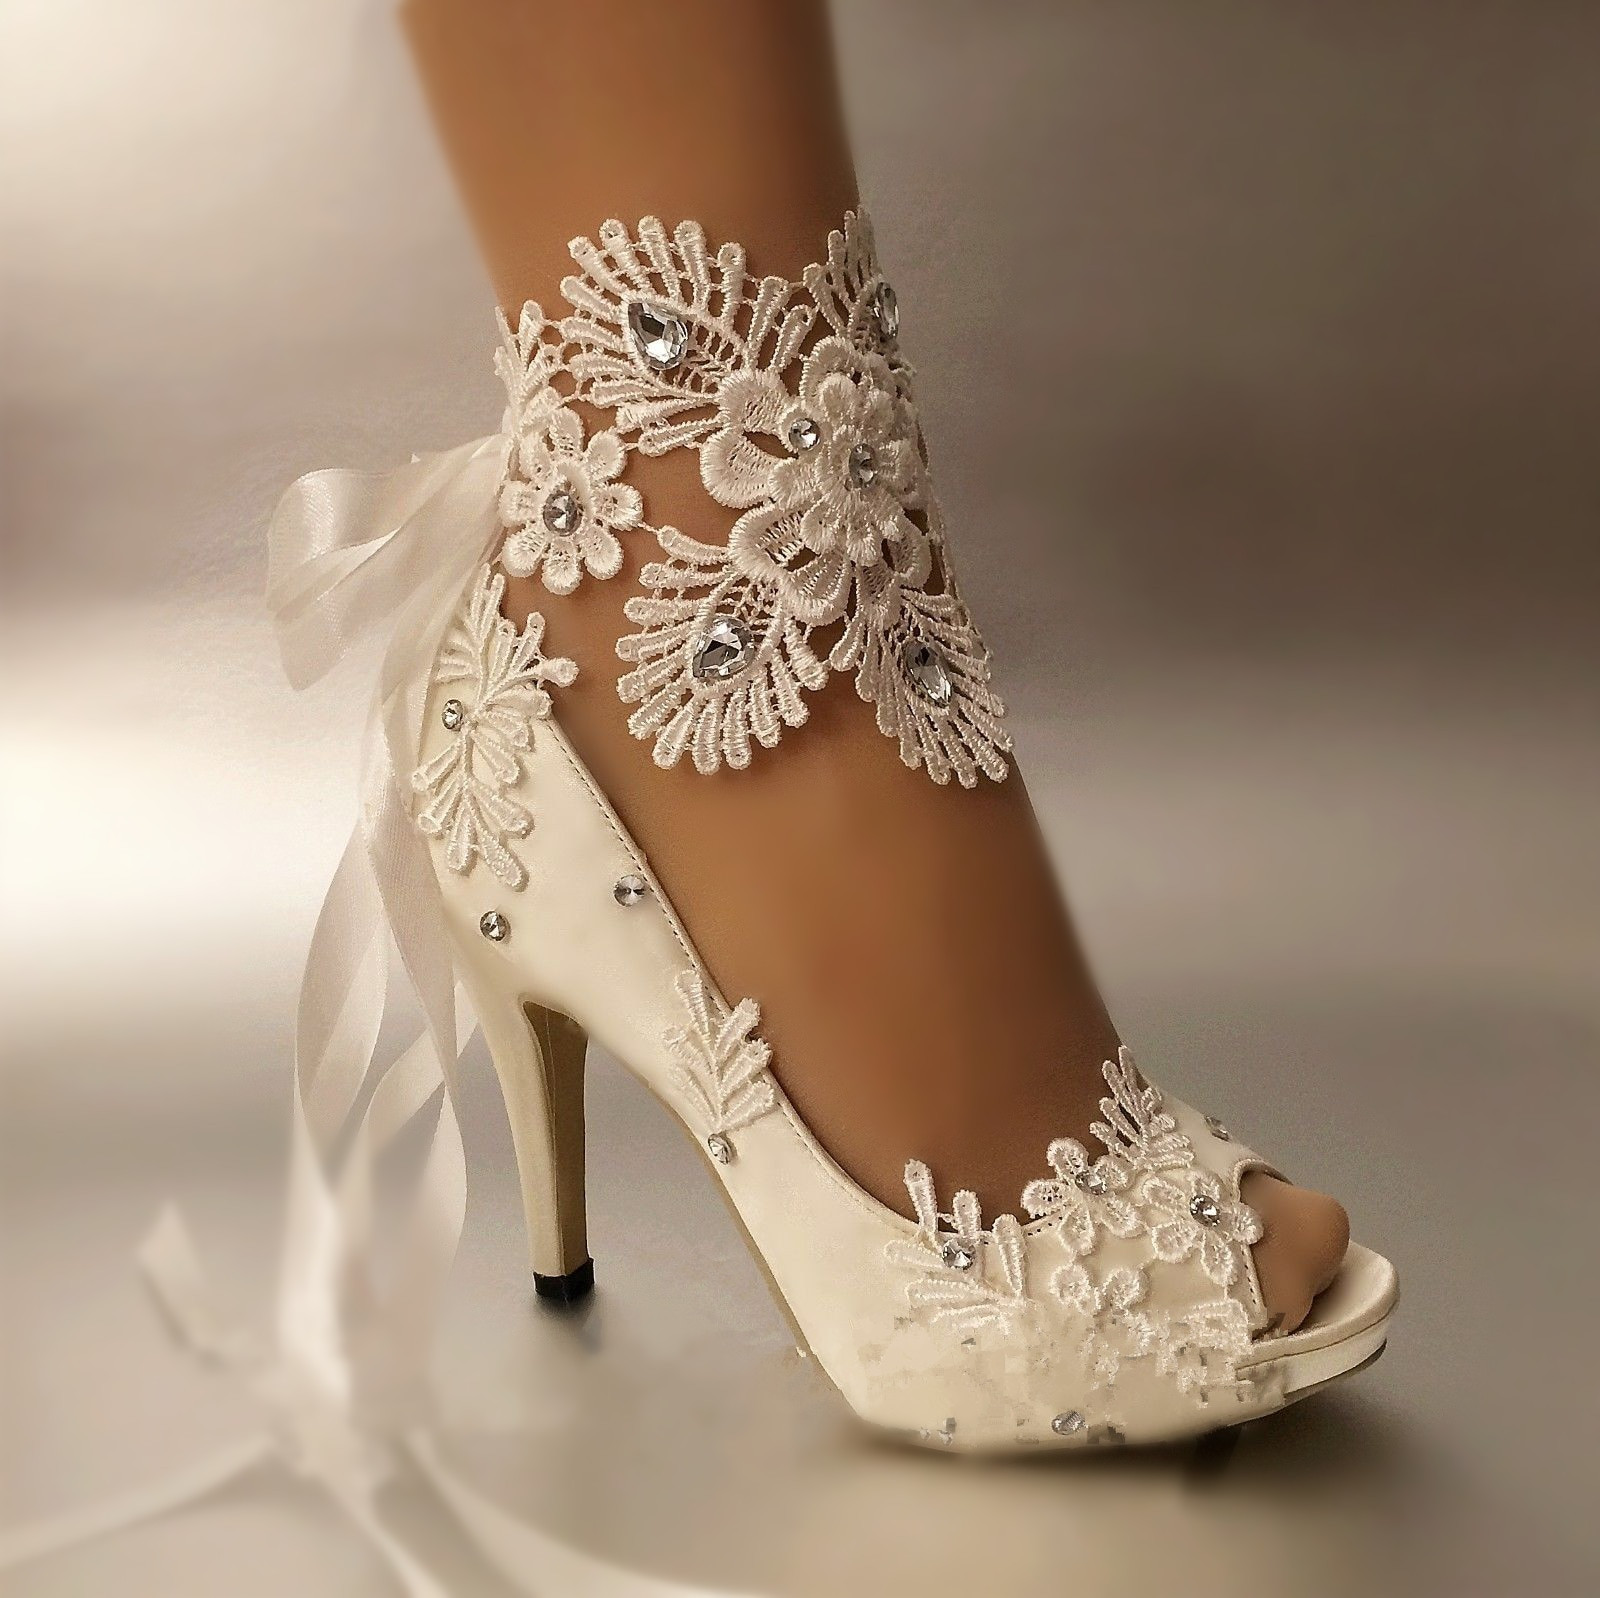 Wedding Shoes For The Bride
 Aliexpress Buy Dress Shoes Women Pumps Open toe lace